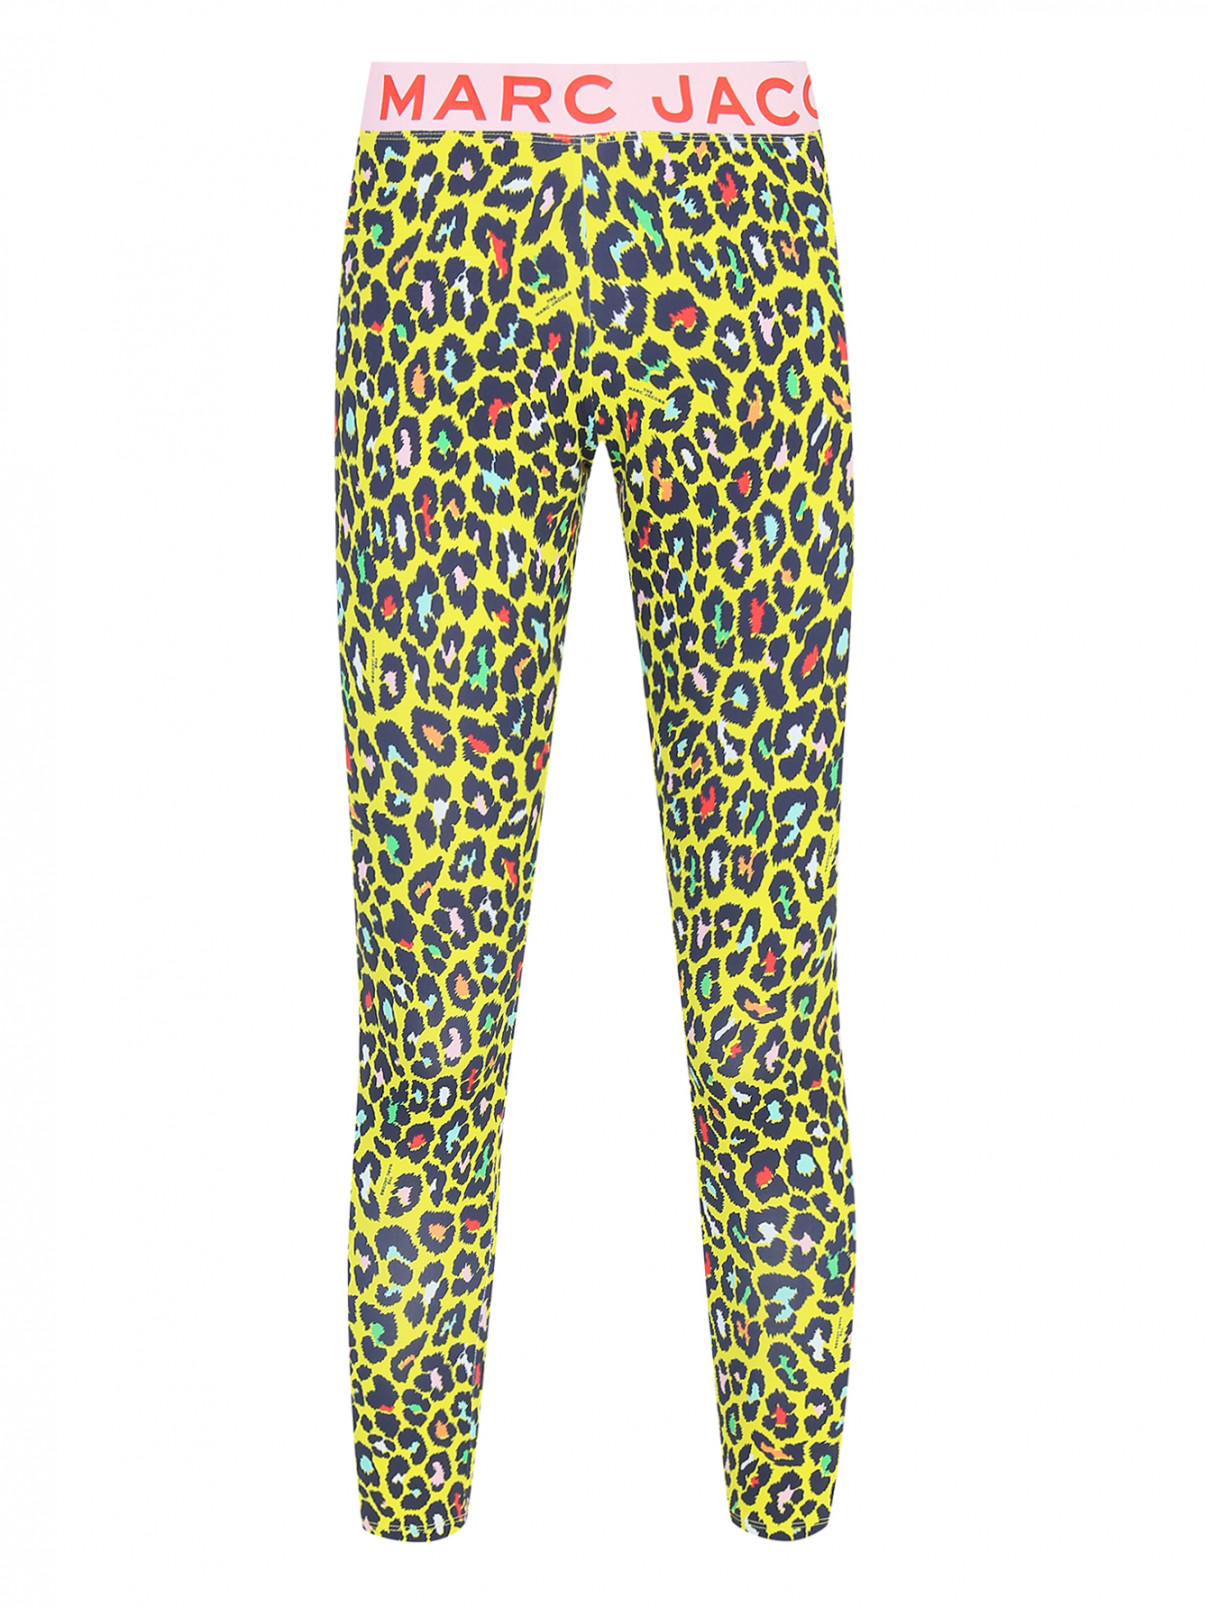 Леггинсы с узором на резинке Little Marc Jacobs  –  Общий вид  – Цвет:  Узор